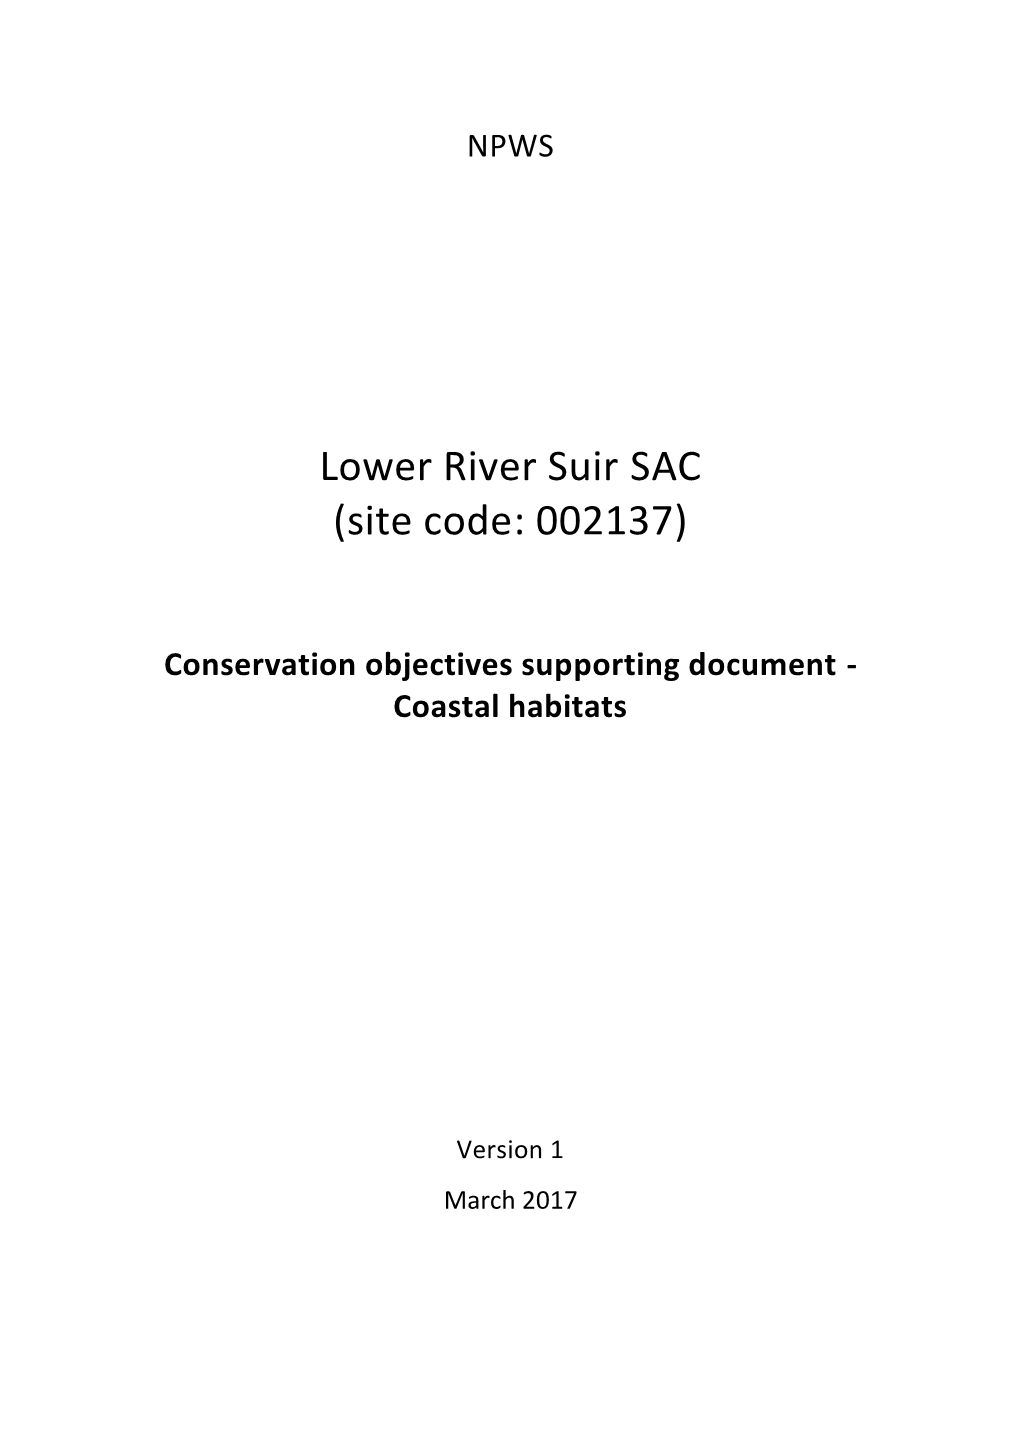 Lower River Suir SAC (Site Code: 002137)